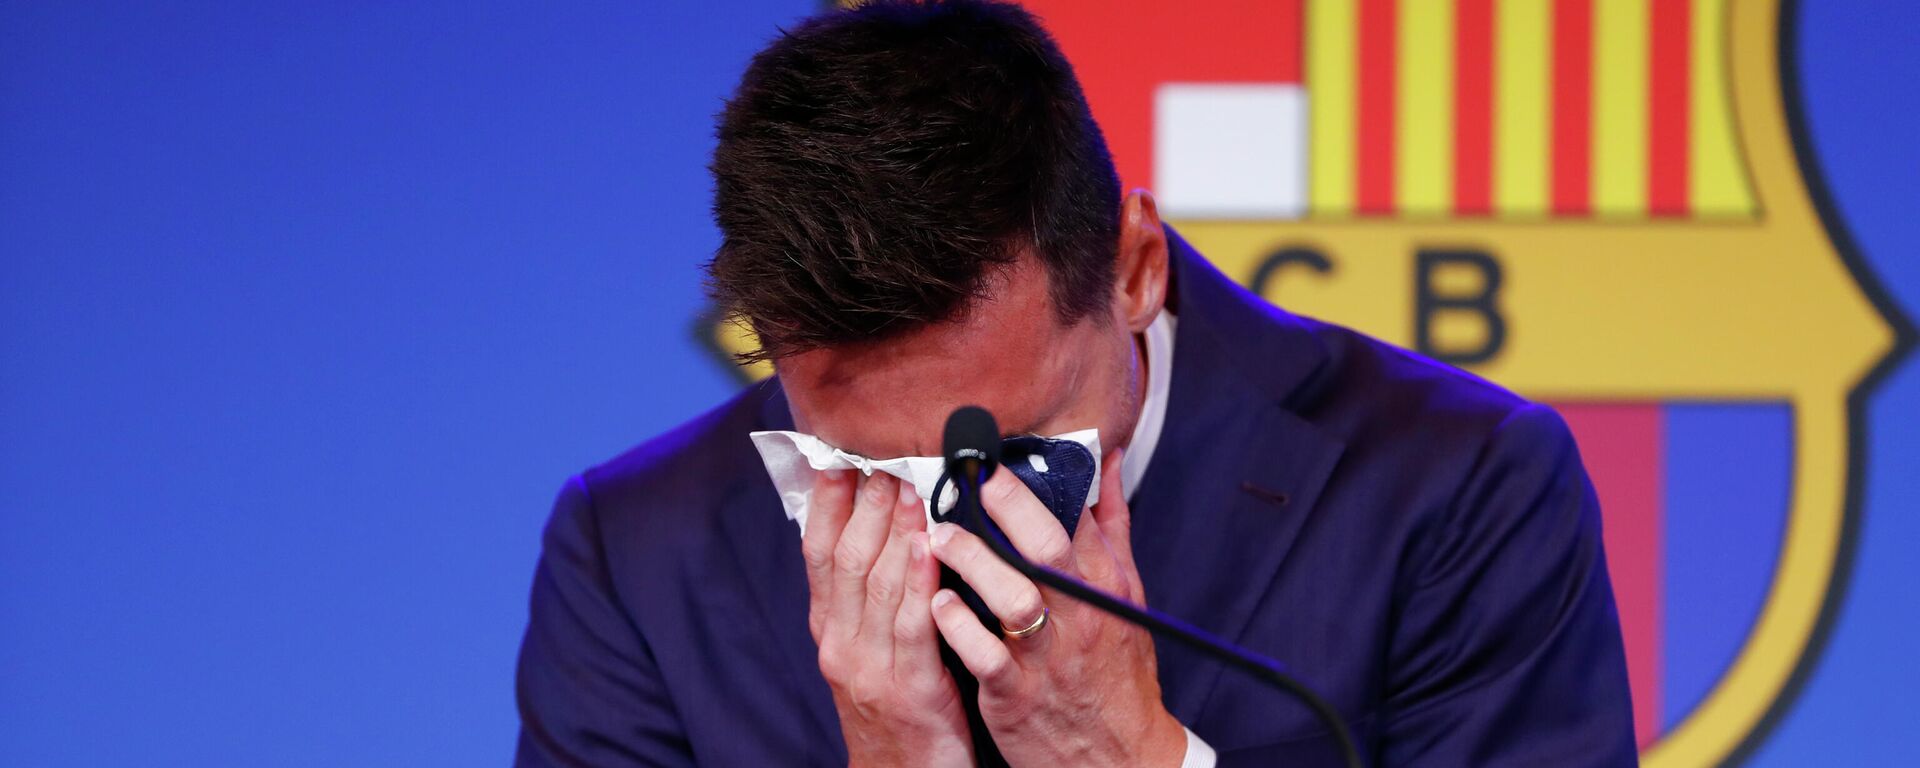 Аргентински фудбалер Лионел Меси плаче на опроштају од Барселоне - Sputnik Србија, 1920, 08.08.2021